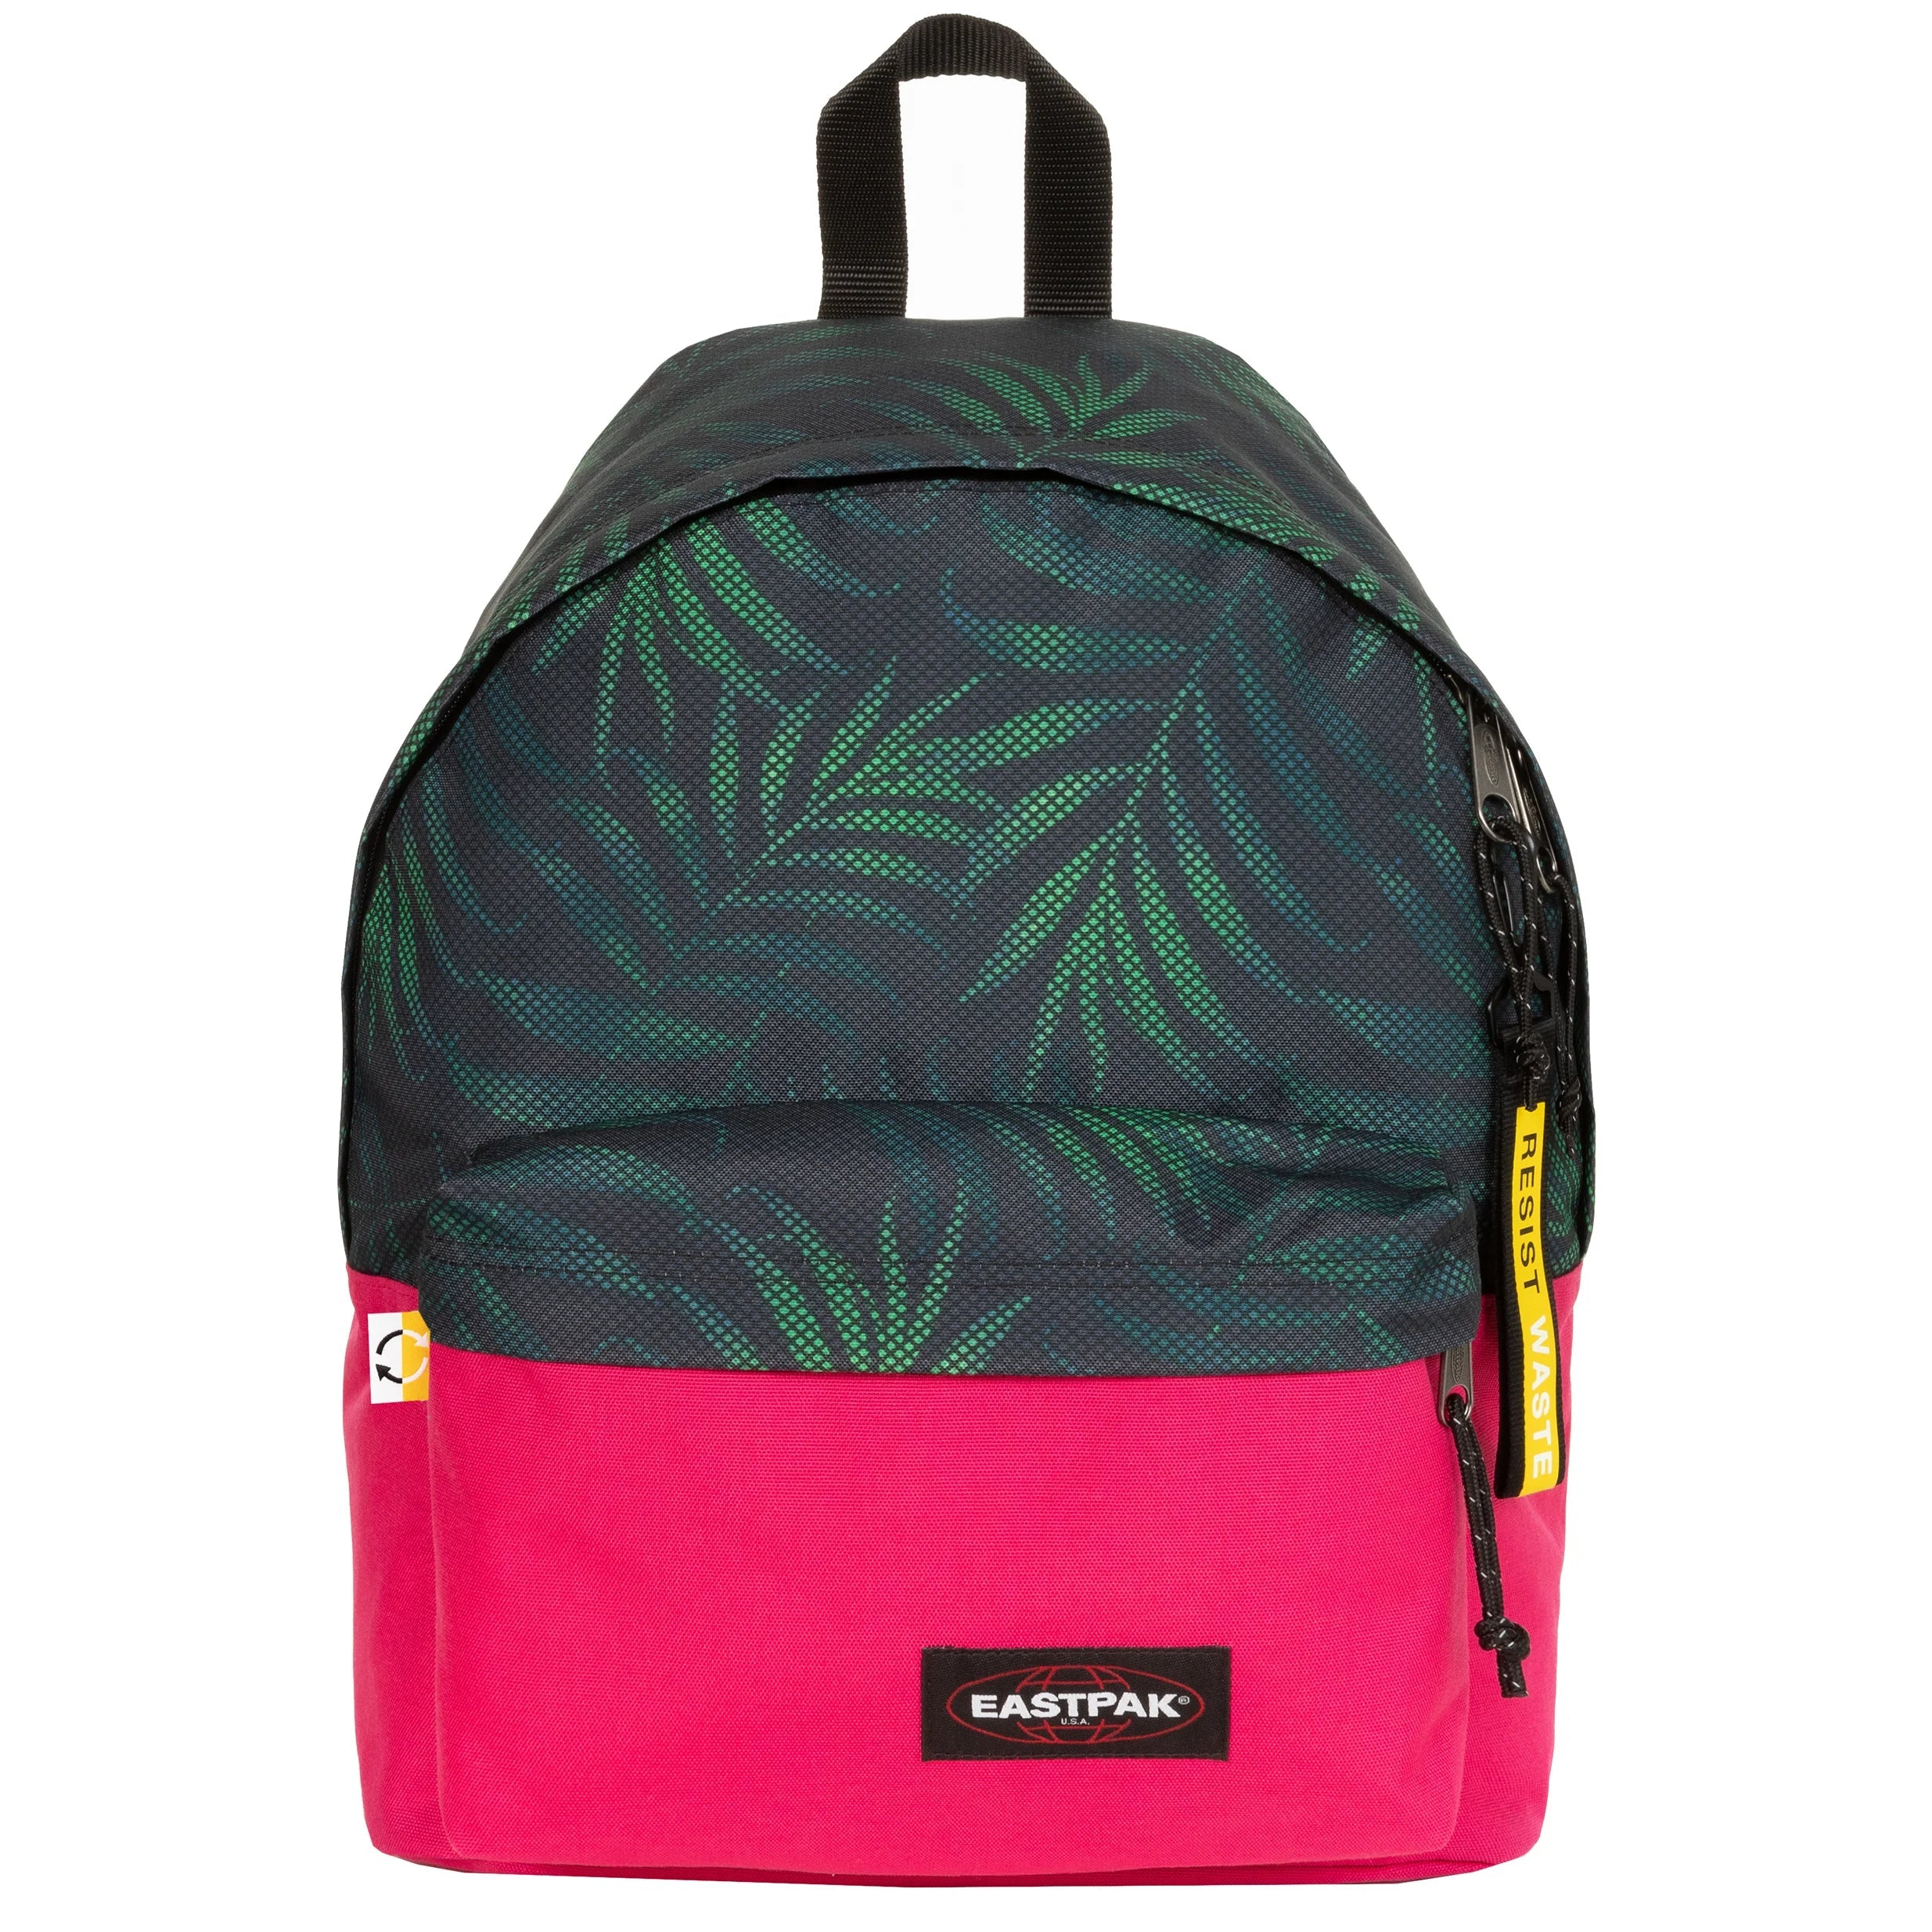 Eastpak Authentic Padded Pak'r leisure backpack 41 cm - Resist W21